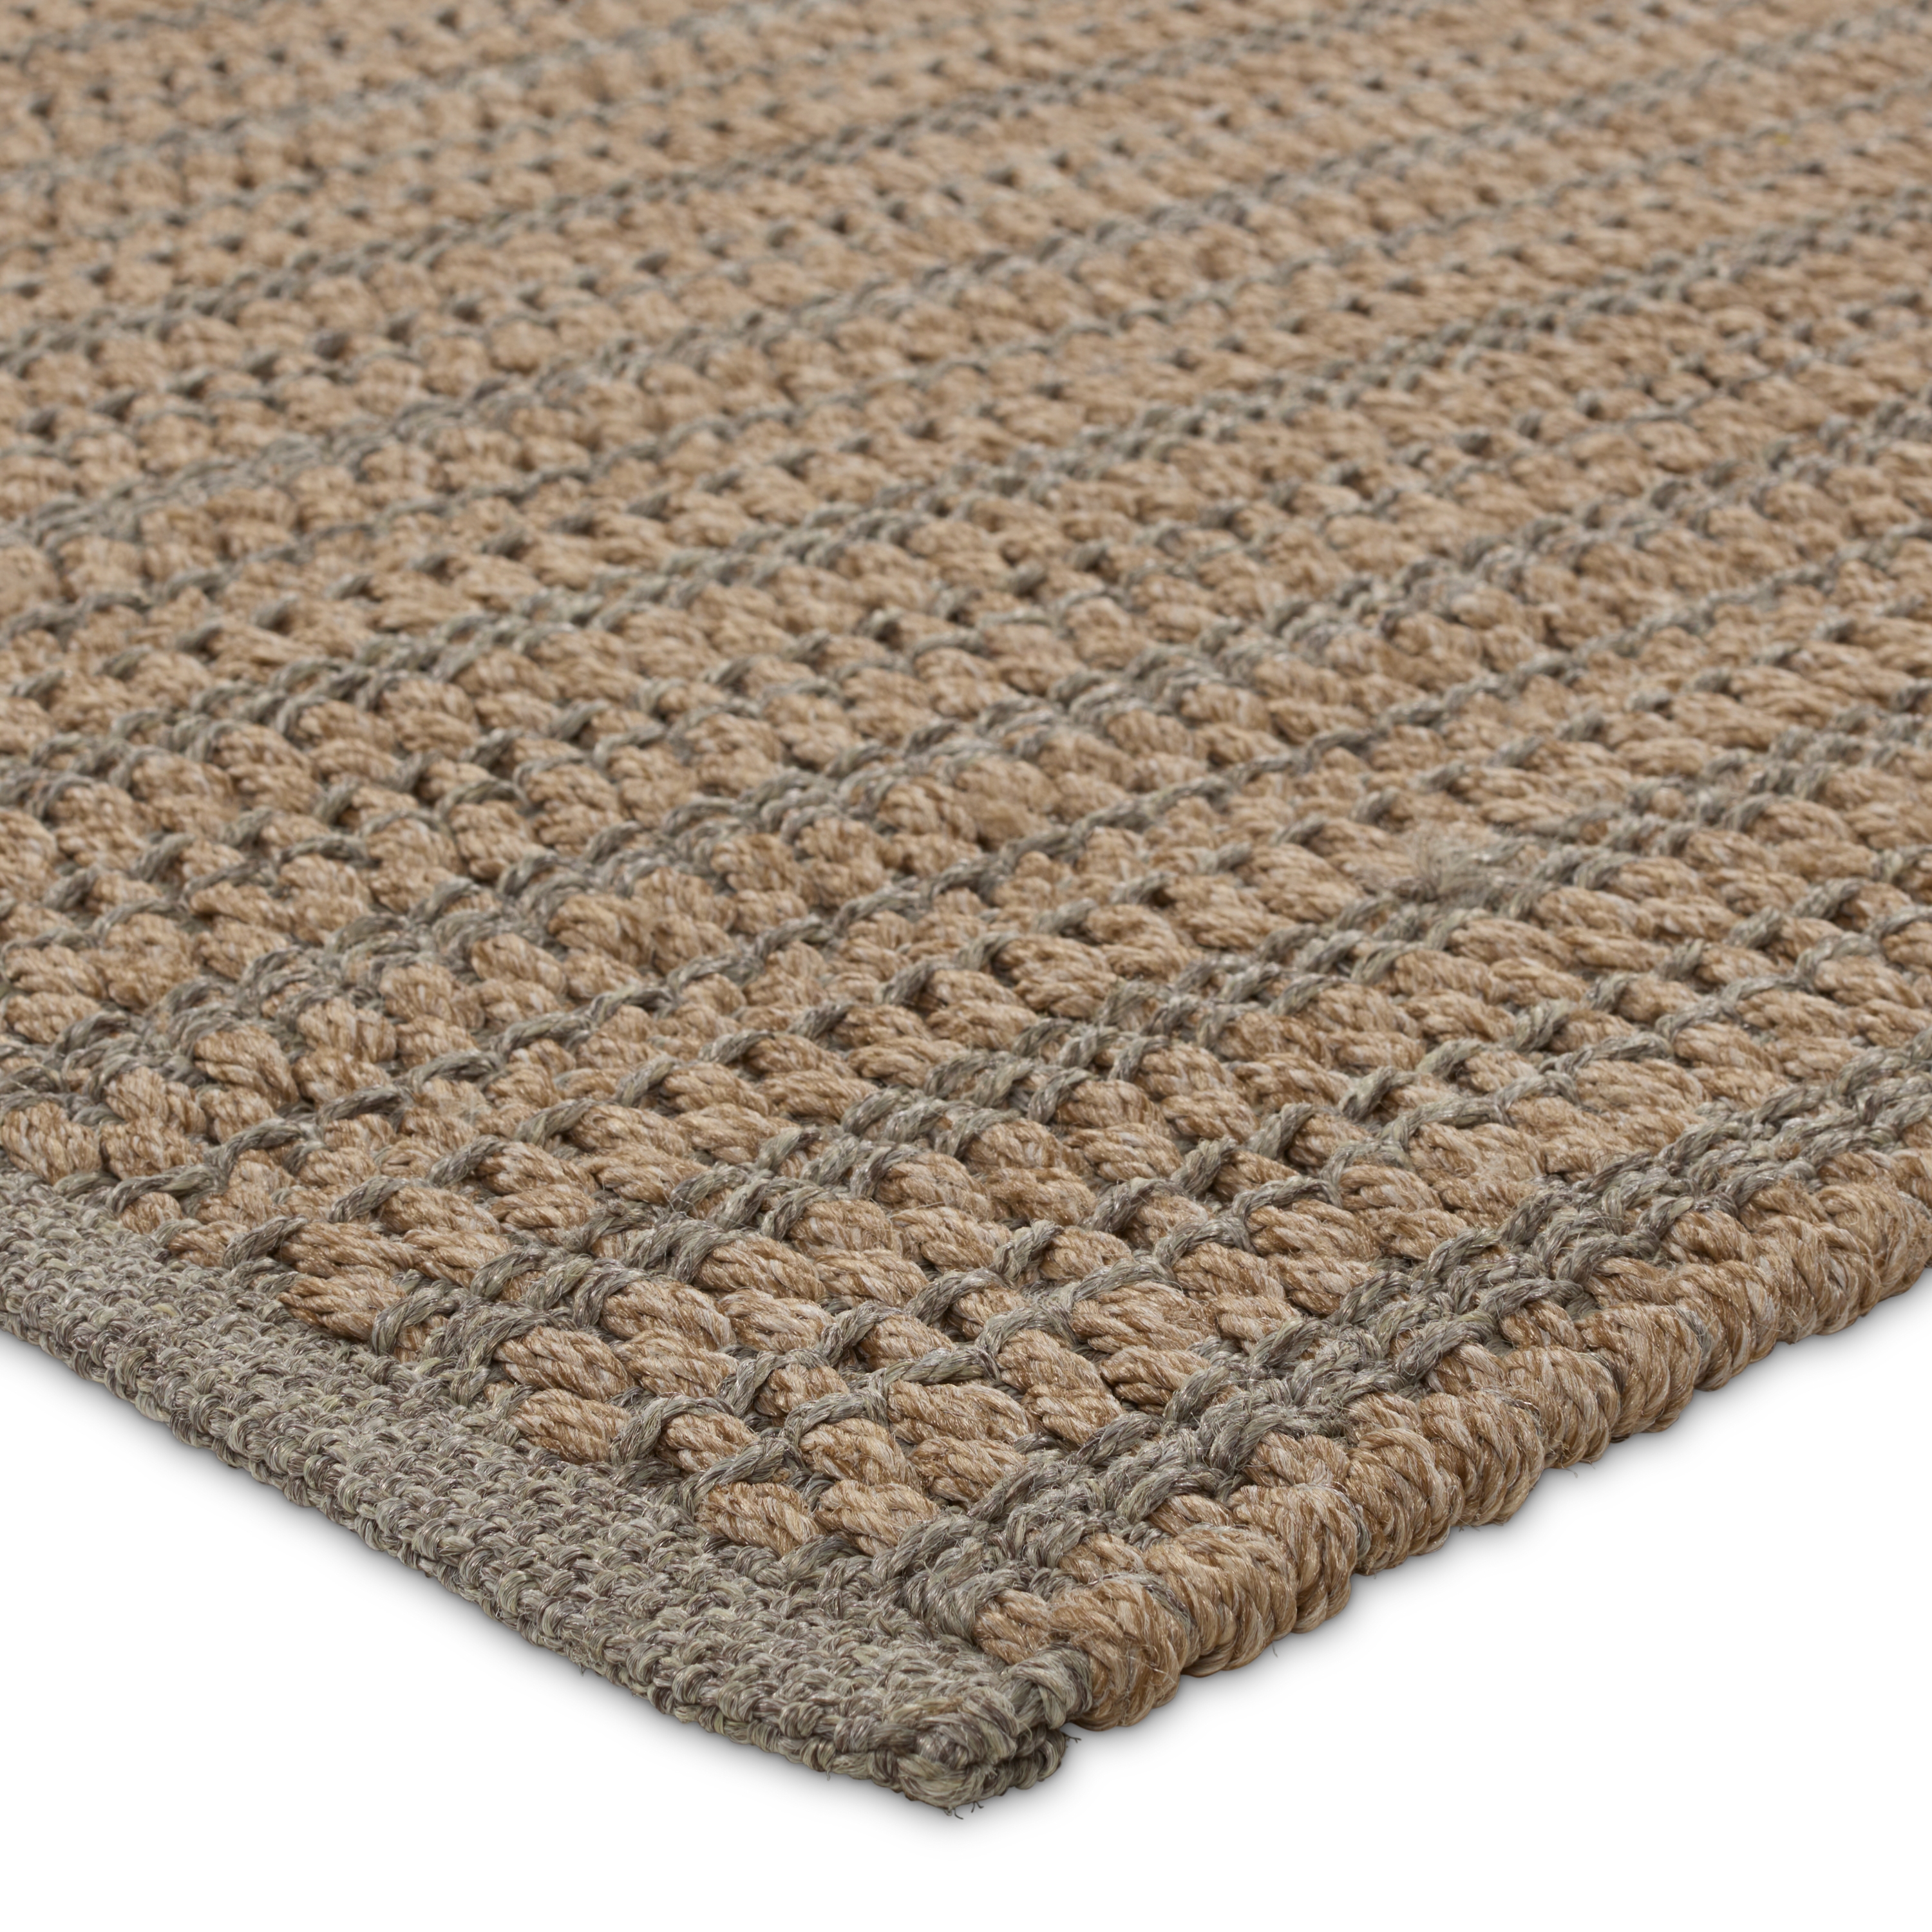 Elmas Handmade Indoor/Outdoor Striped Tan/Gray Area Rug (4'X6') - Image 1